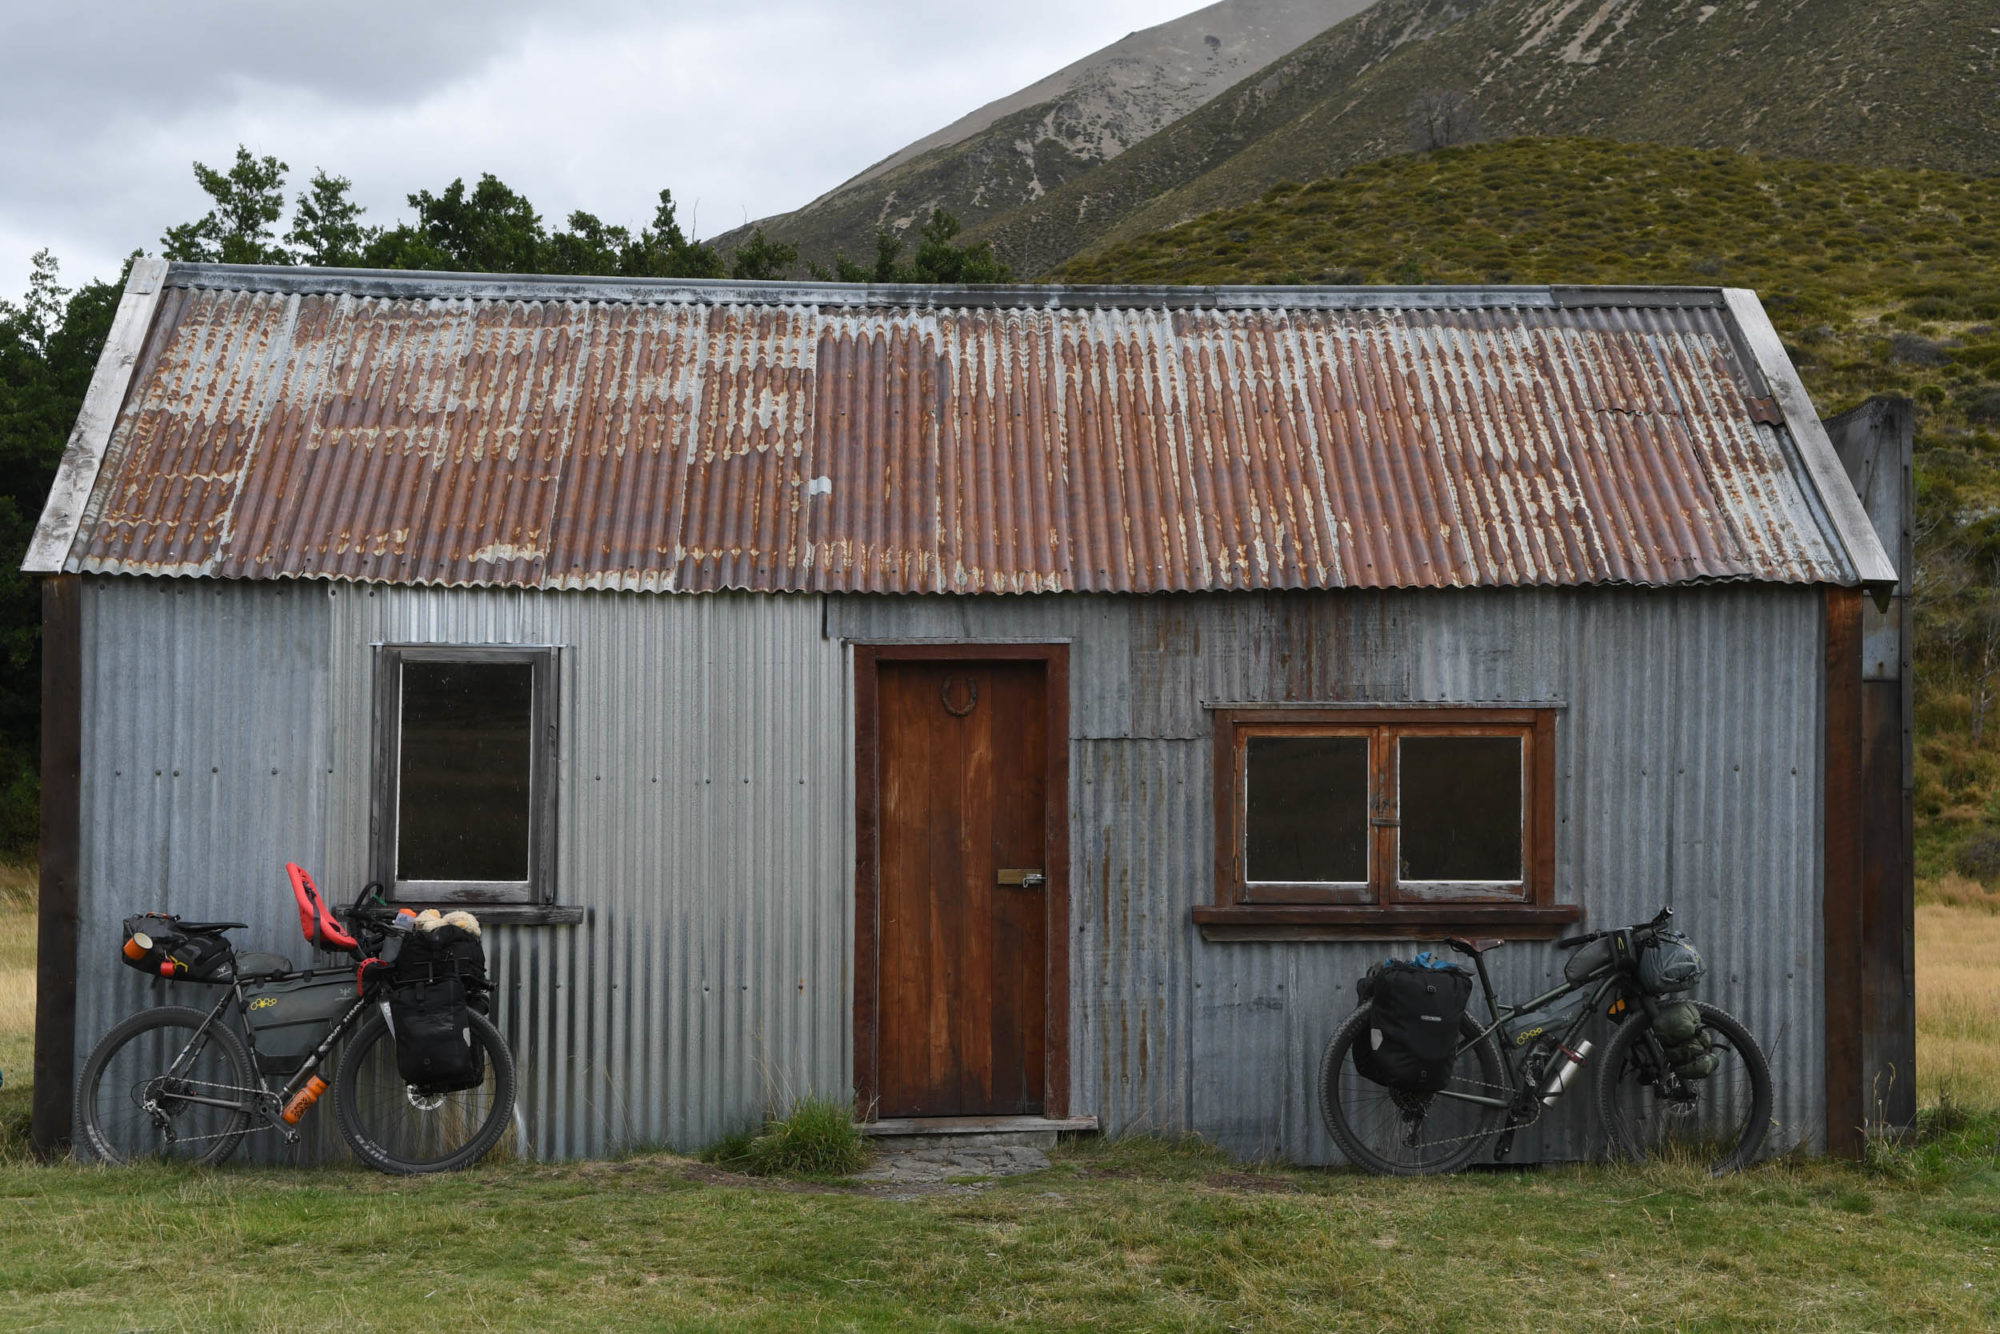 Joachim Rosenlund, Family Bikepacking, New Zealand